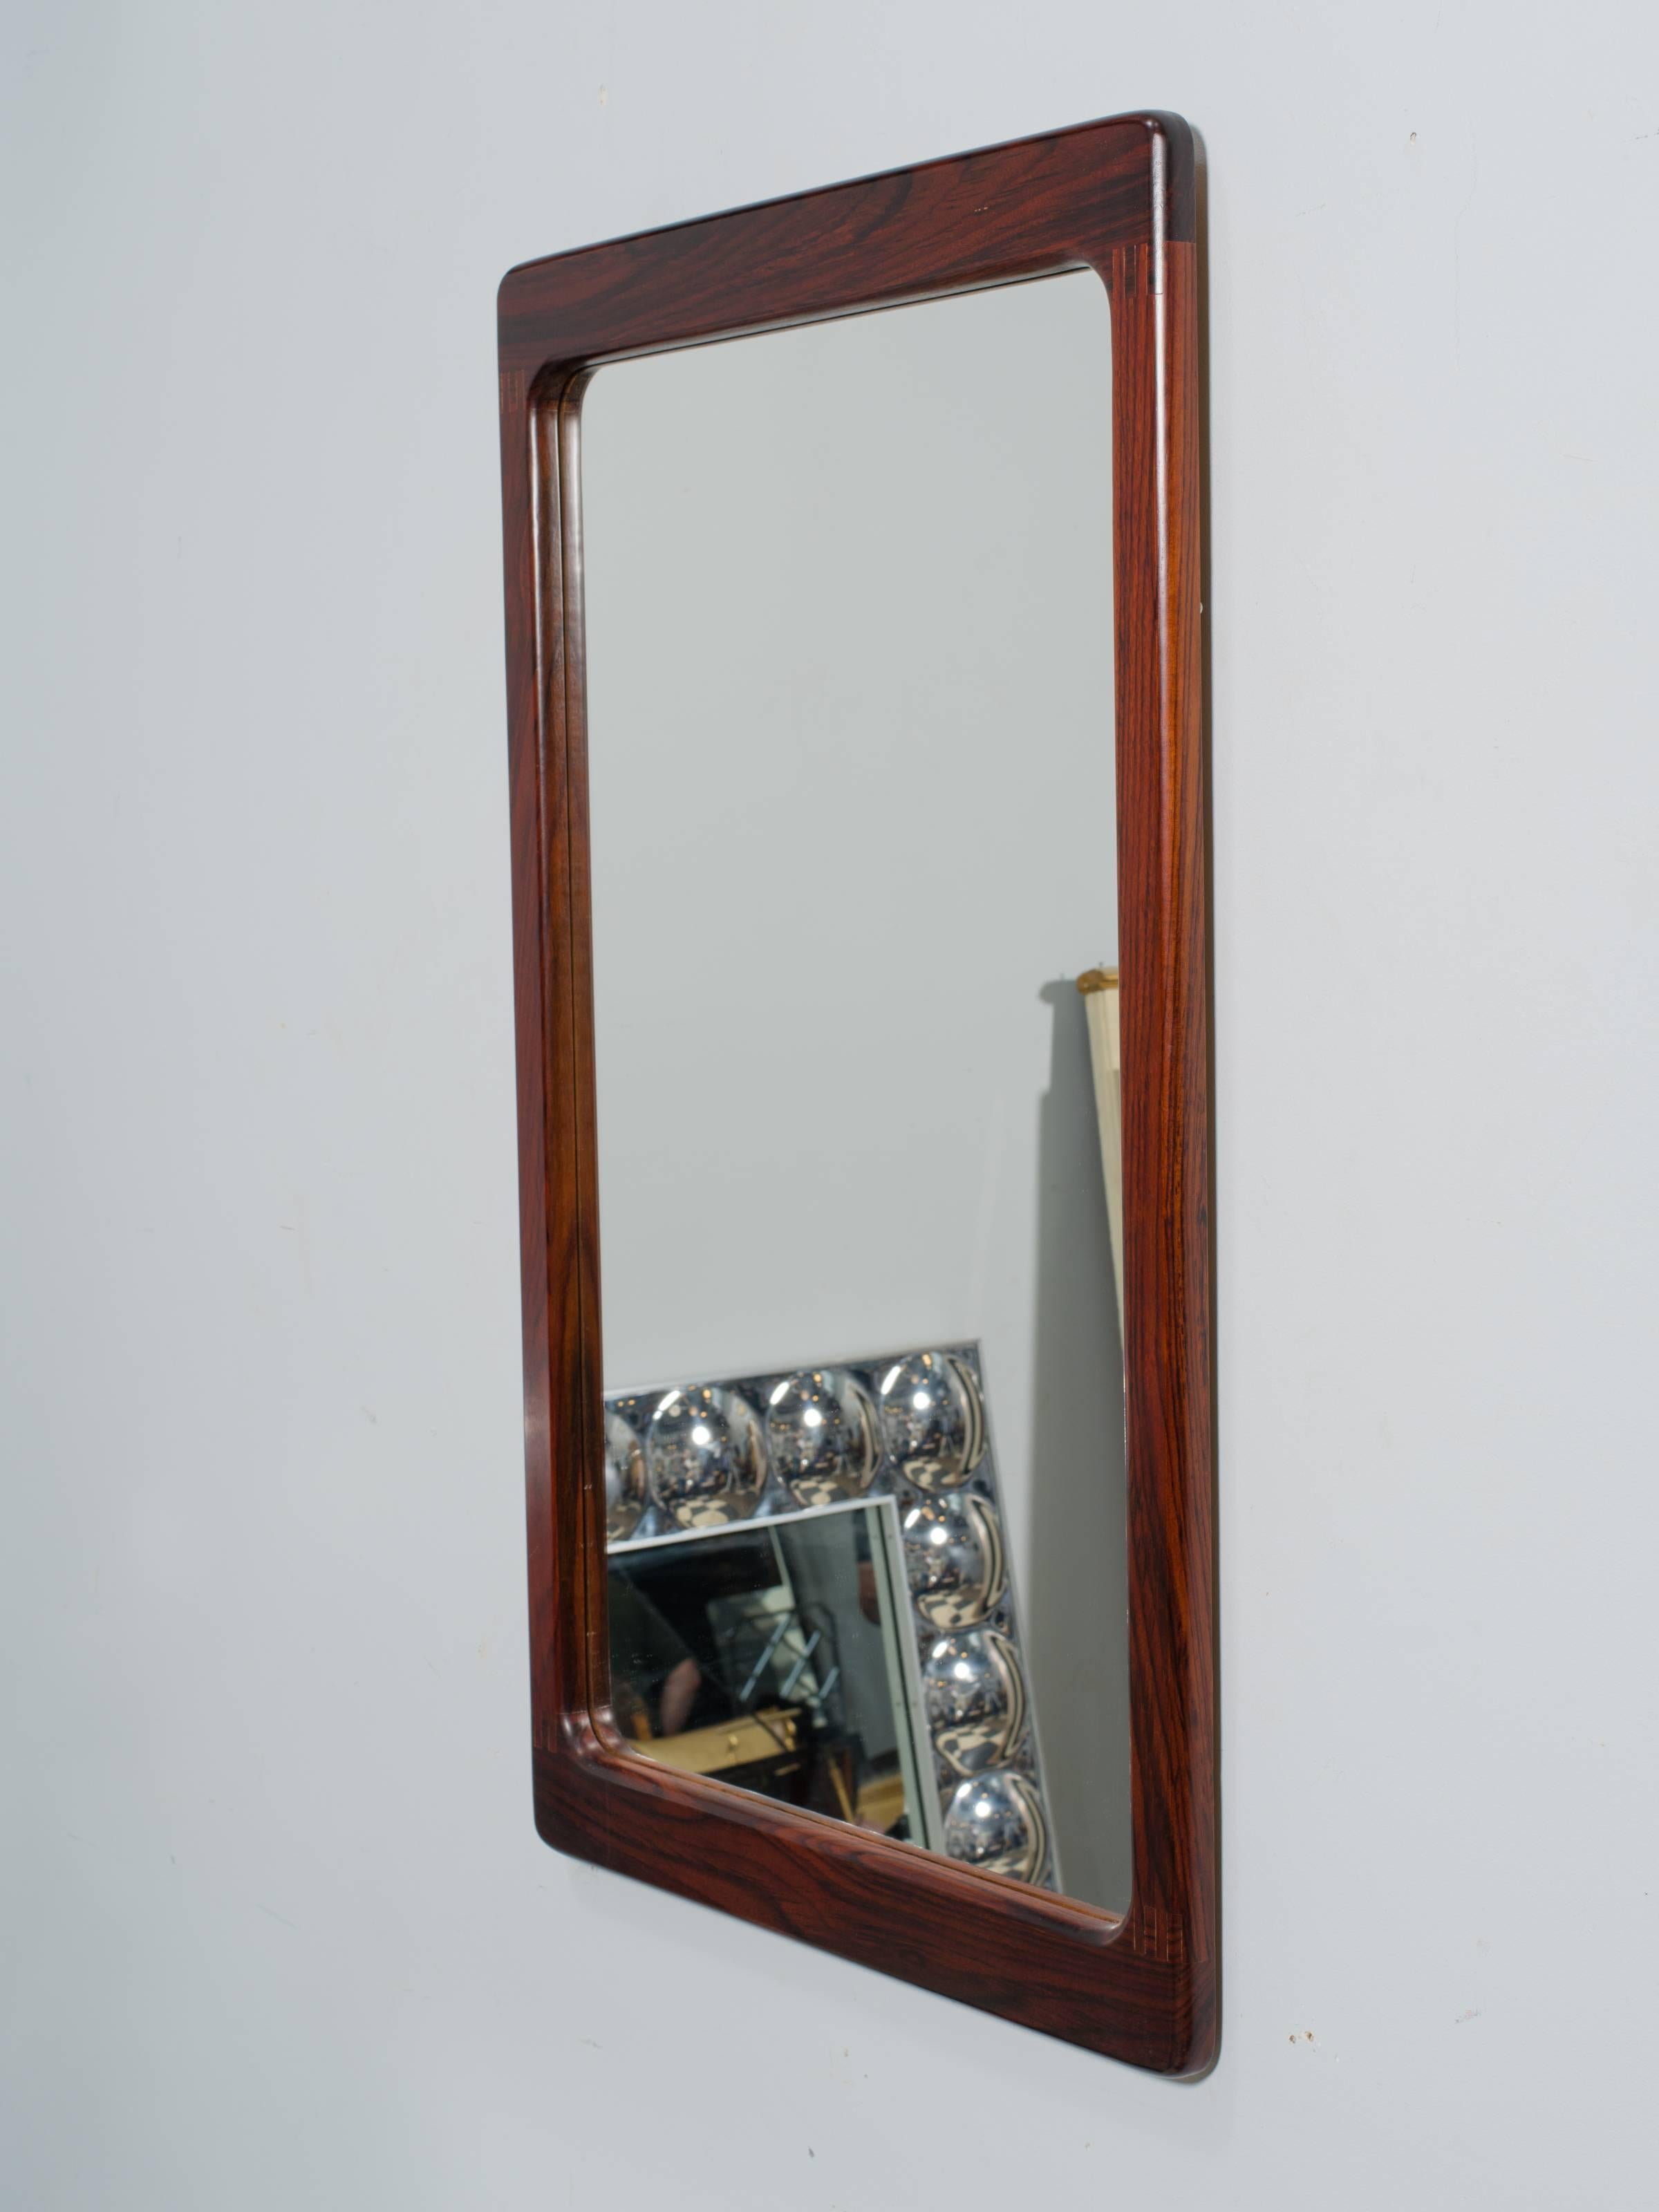 Danish modern rosewood wall mirror.